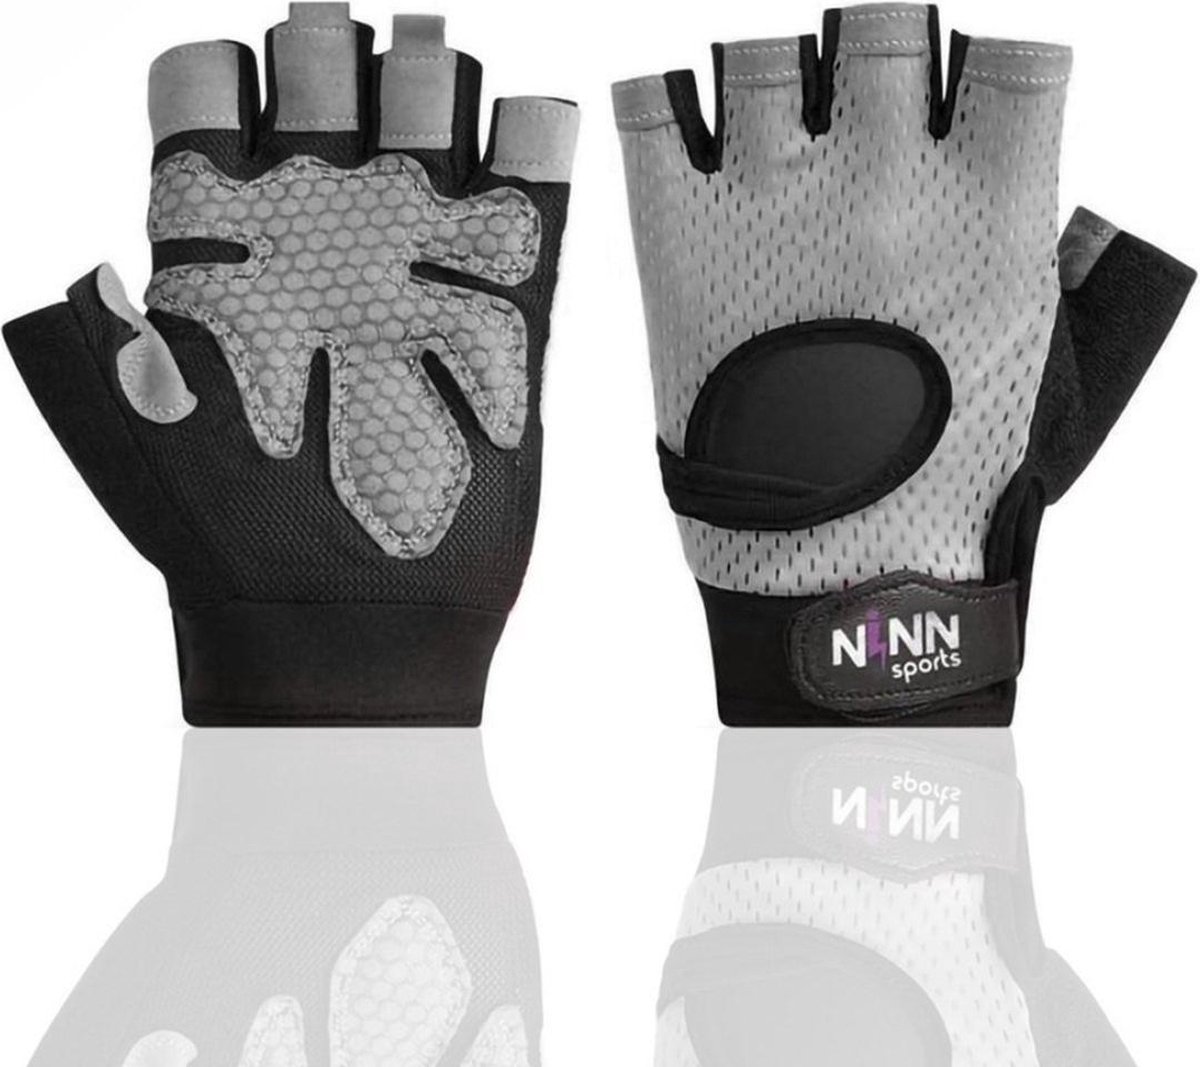 NINN Sports gloves S (Grijs) - fitness handschoenen - Sport handschoenen - Grip Gloves - Fitnesshandschoenen 3 varianten